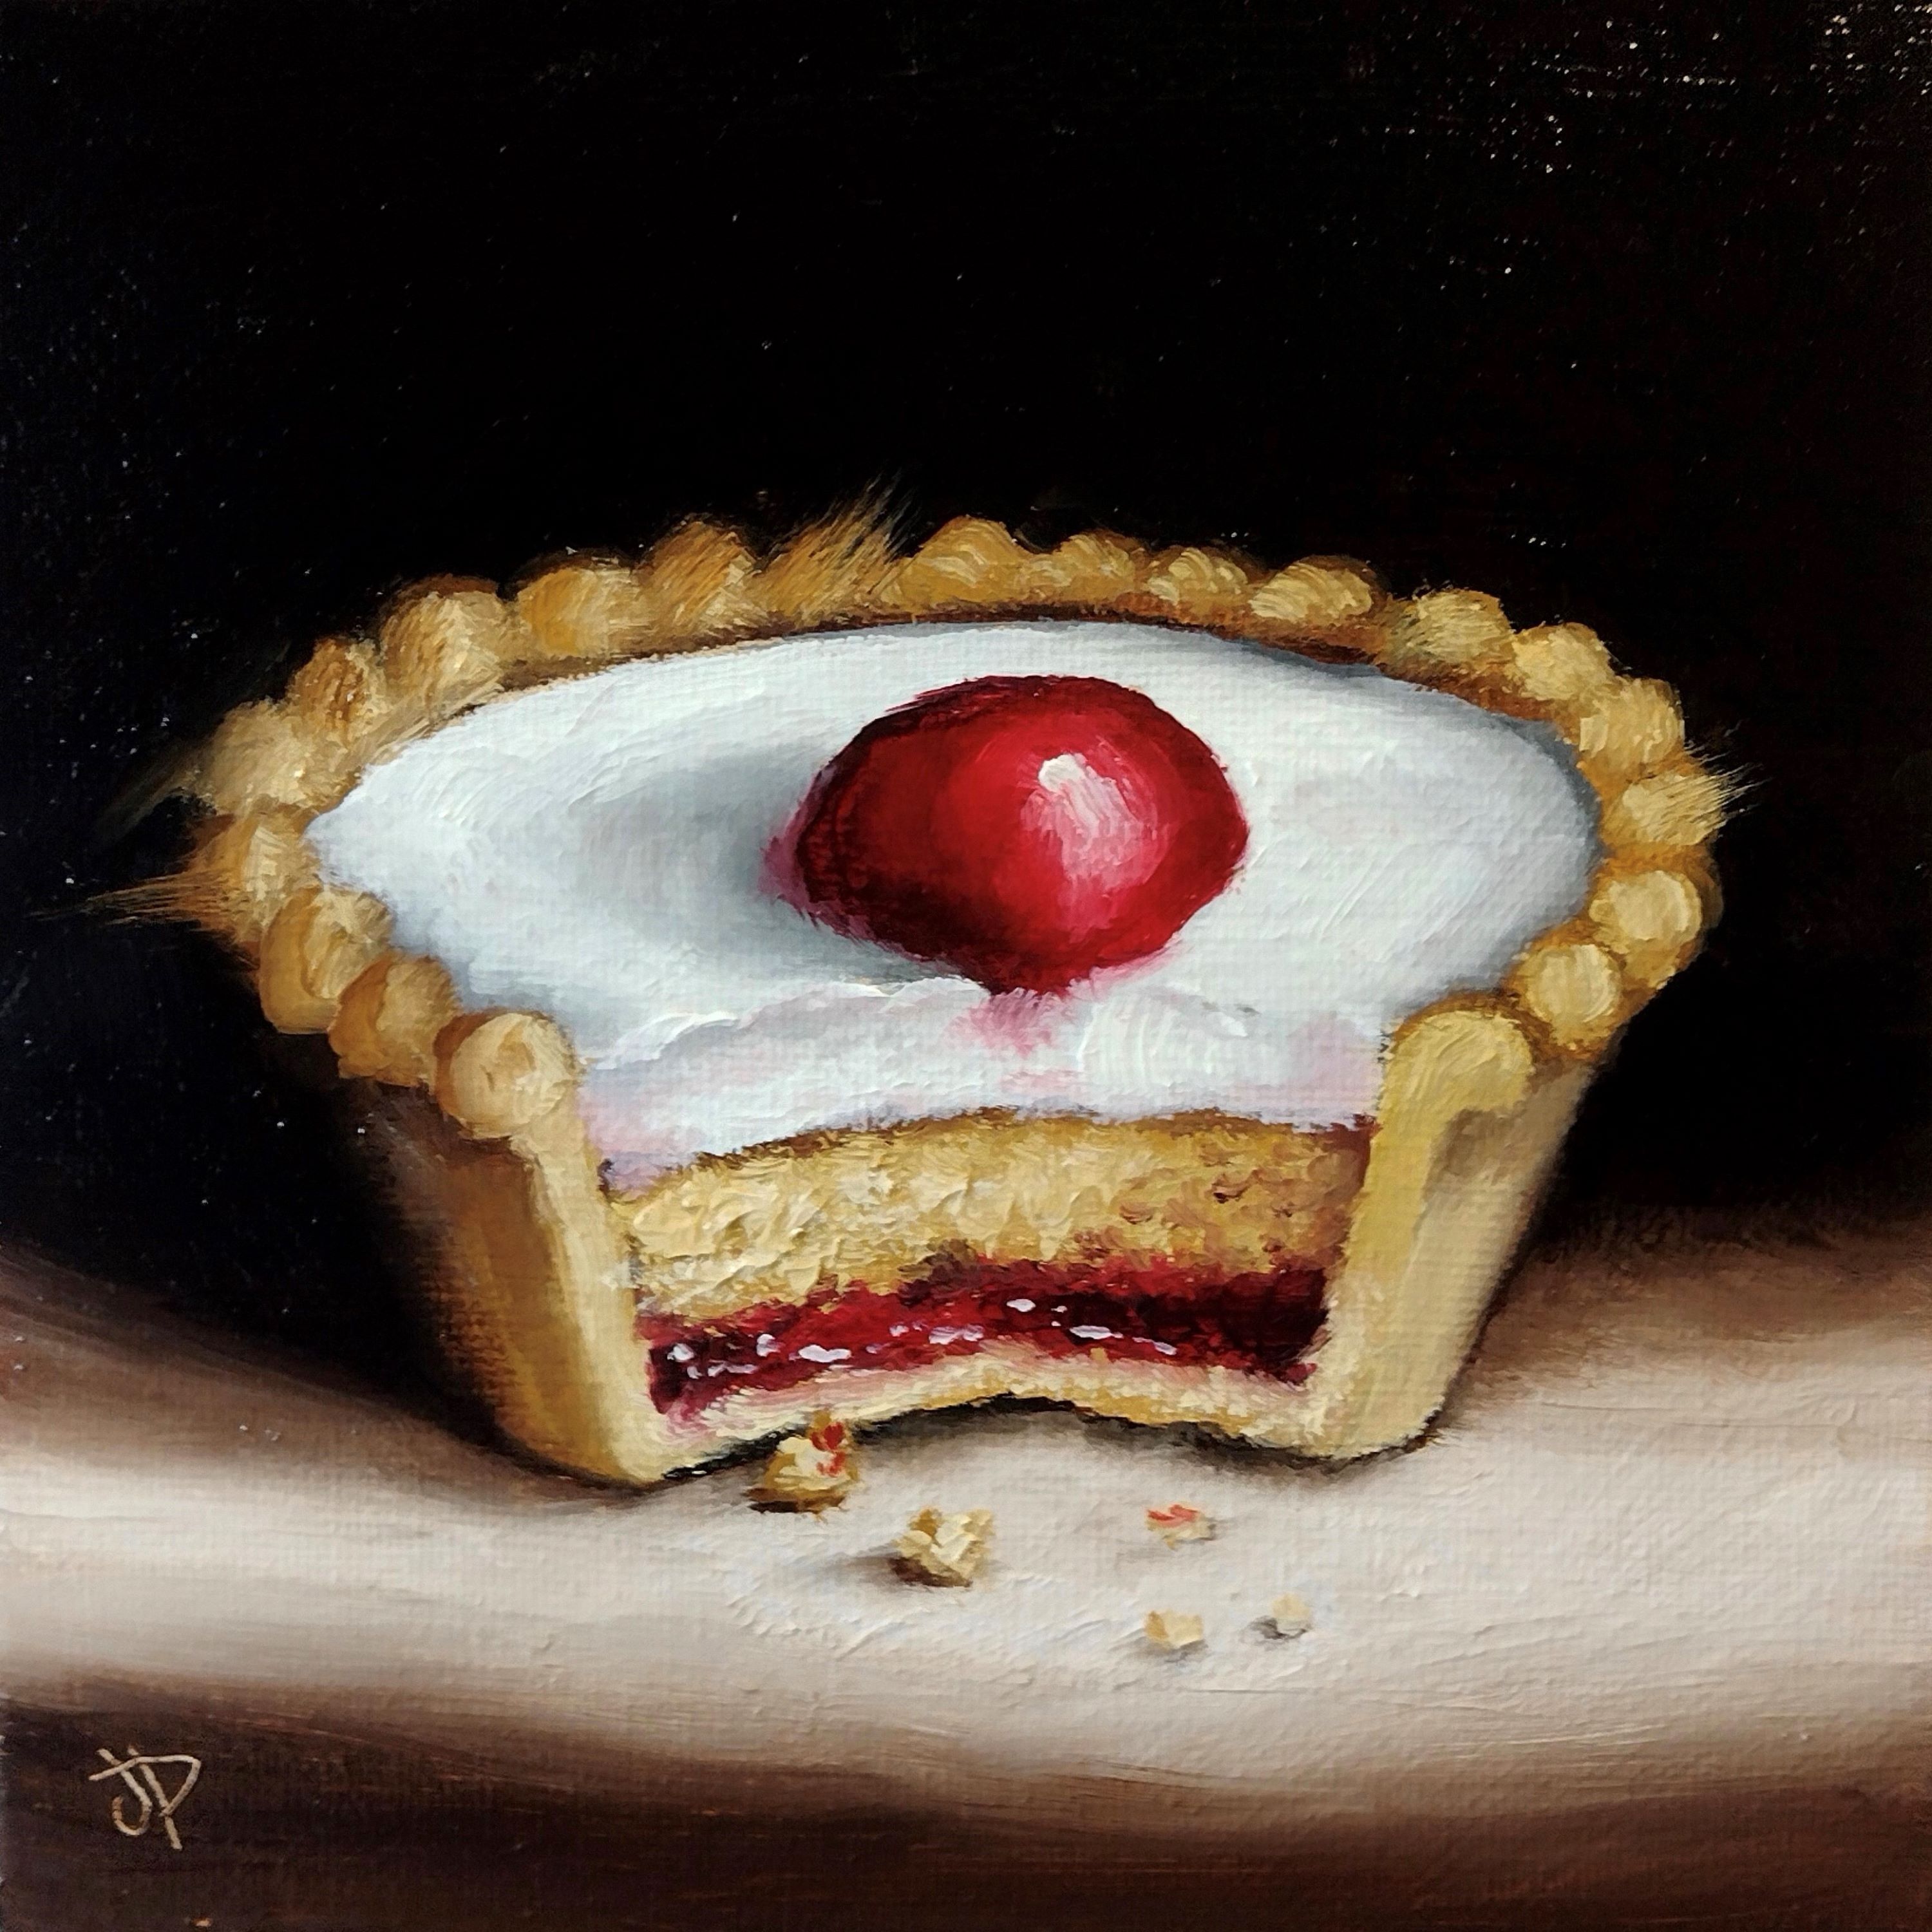 'Cherry Bakewell Tart' by artist Jane Palmer